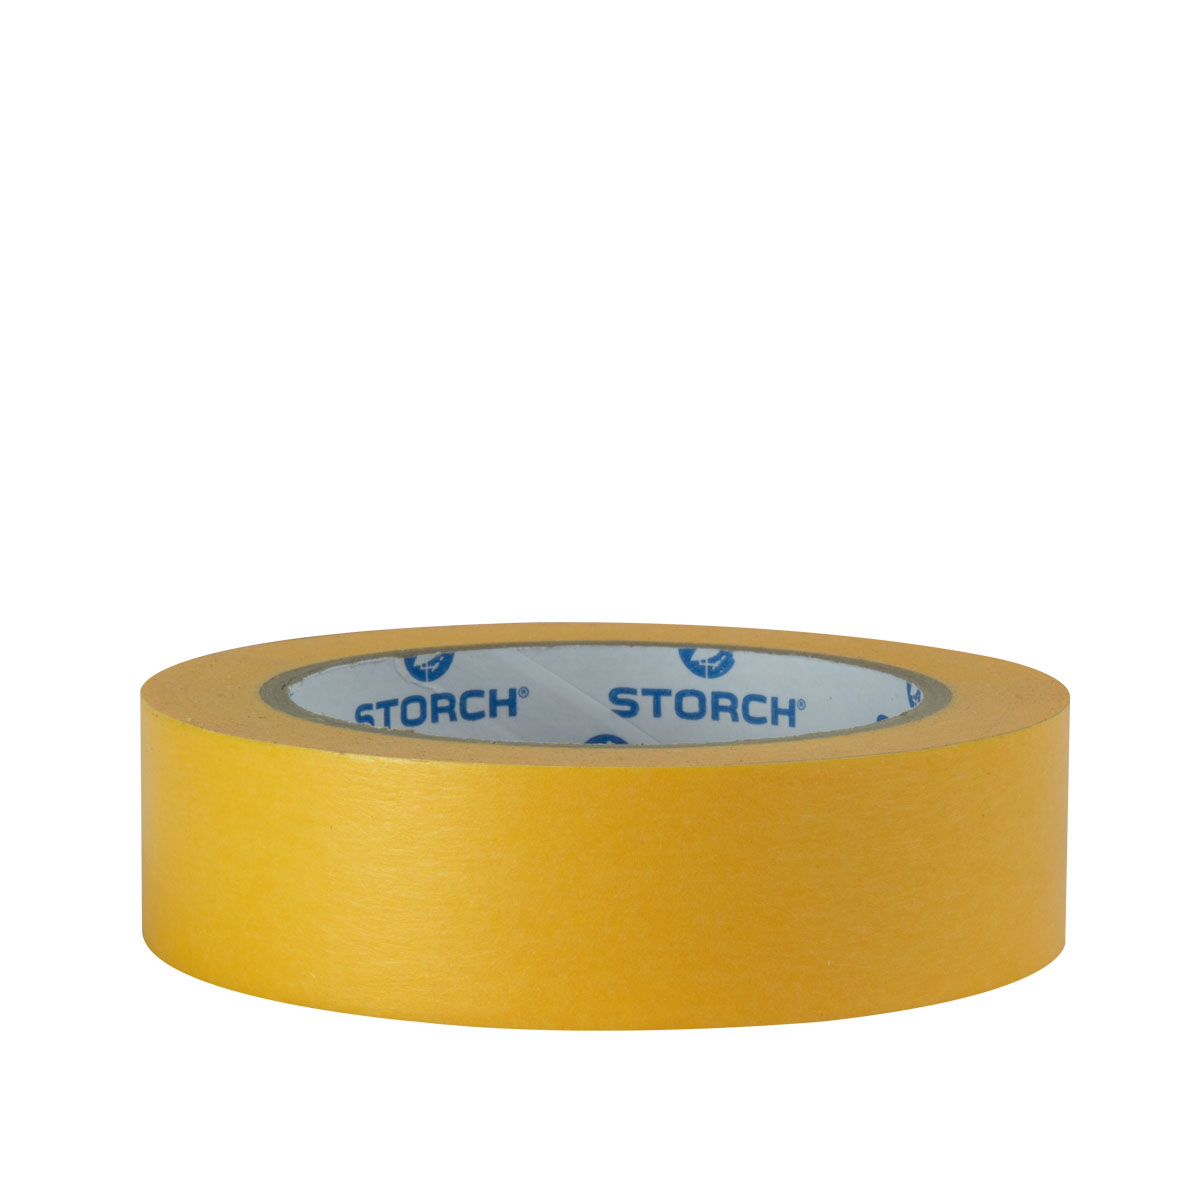 Storch Sunnypaper Das Goldene 30mmx50m -Profi, Rolle, Goldband 493131